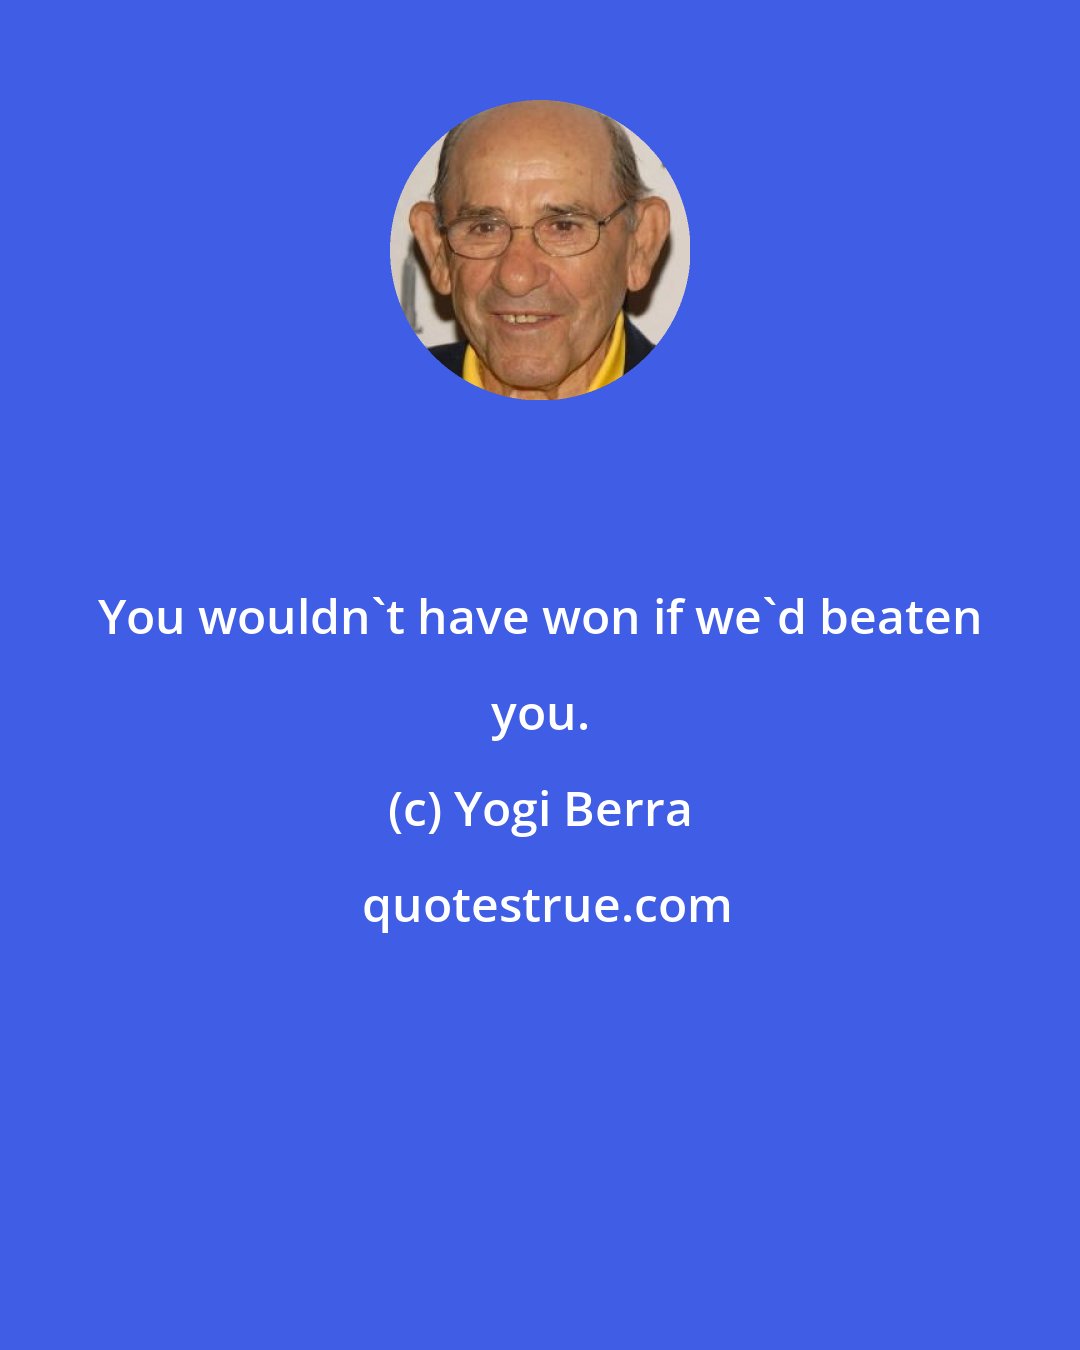 Yogi Berra: You wouldn't have won if we'd beaten you.